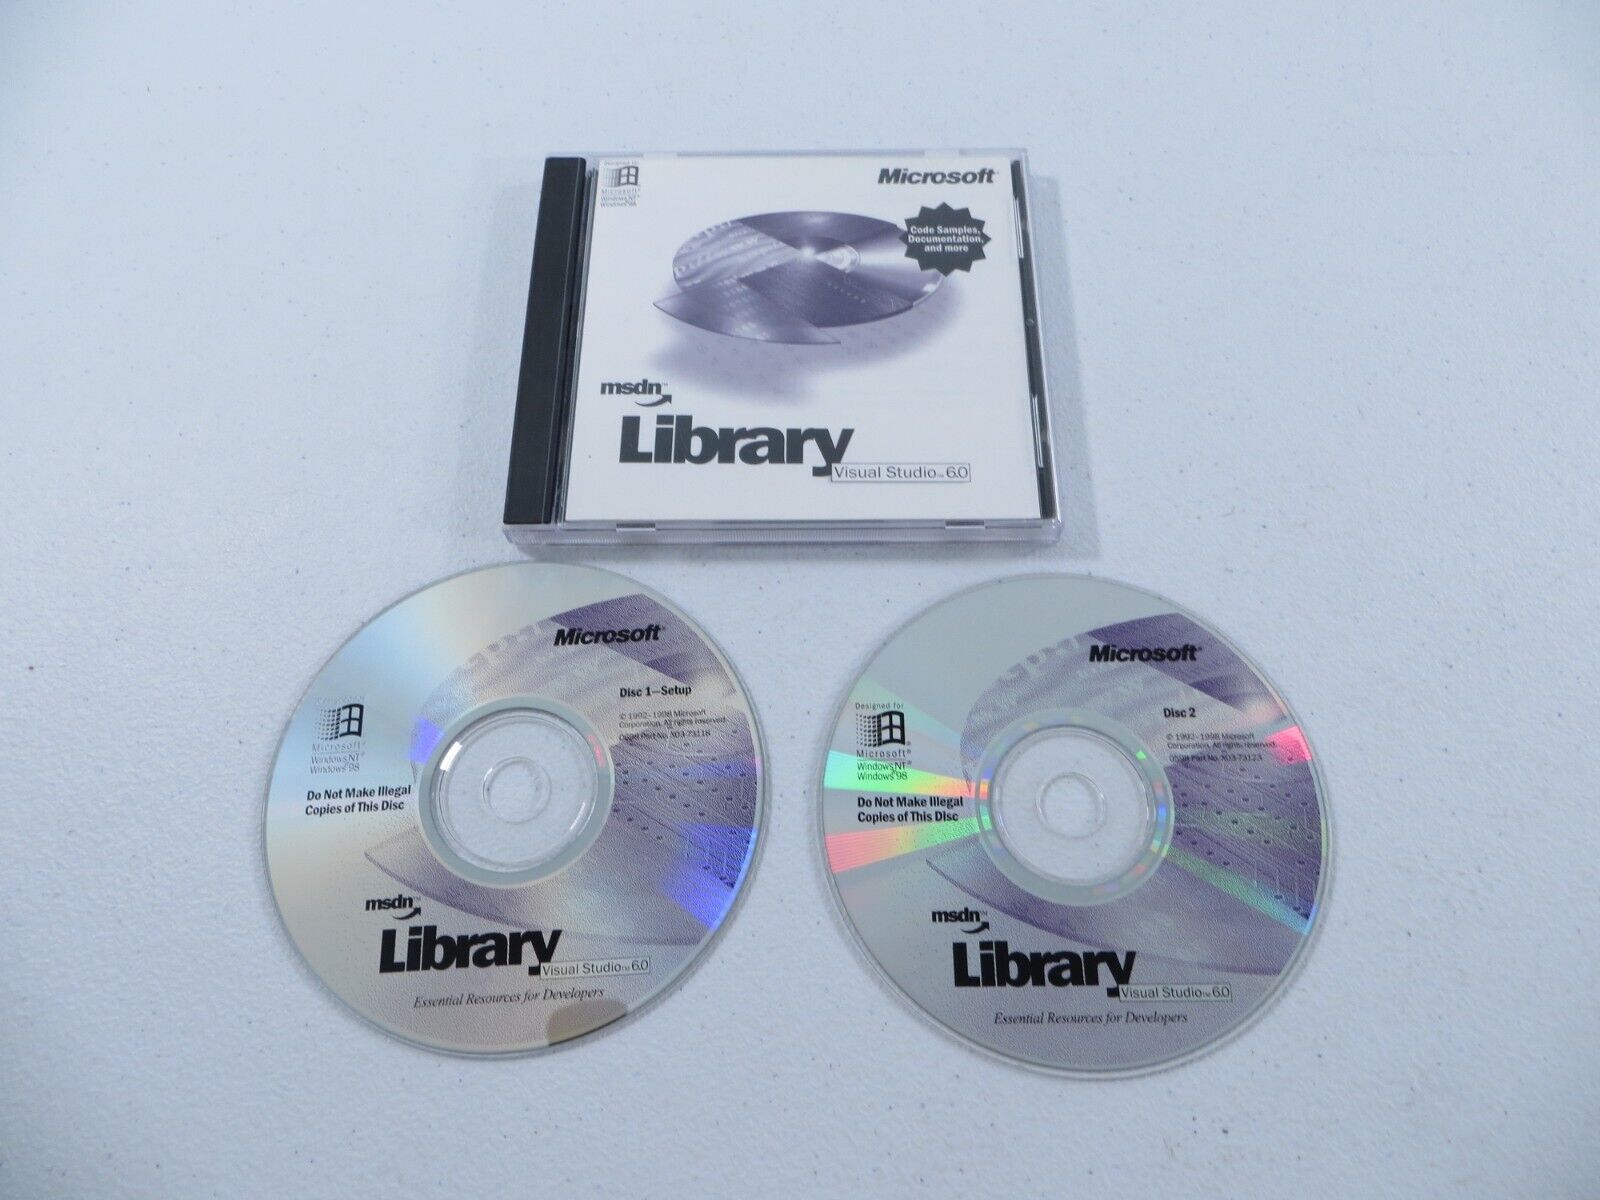 Microsoft MSDN Library Visual Studio 6.0 2 CD Set Windows 98/NT